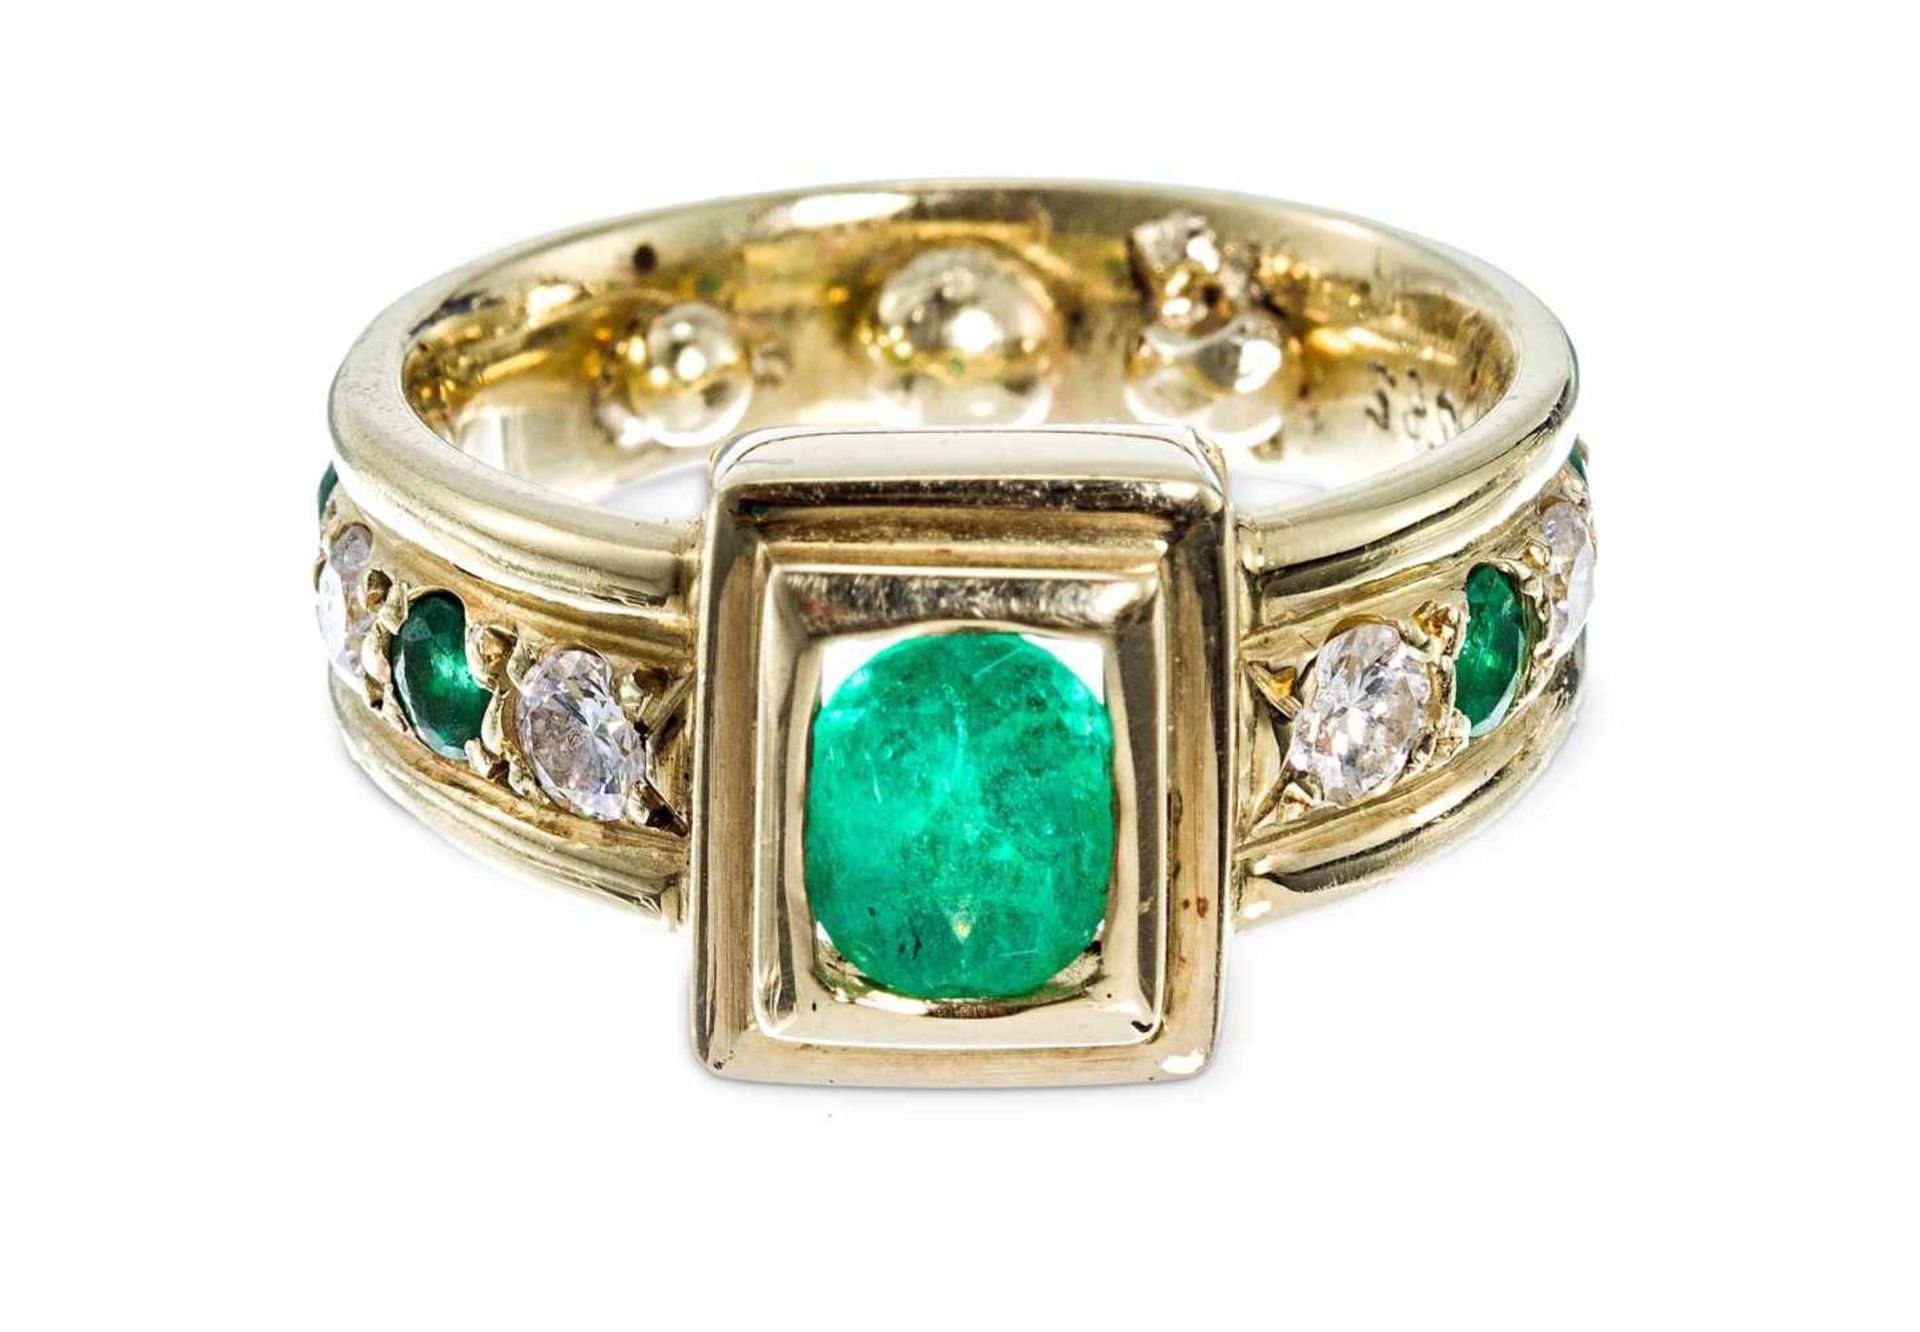 Smaragd-Diamantring585/f. Gold. Bandform. Ausgefasst mit ovalem, tiefgrünem Smaragd in